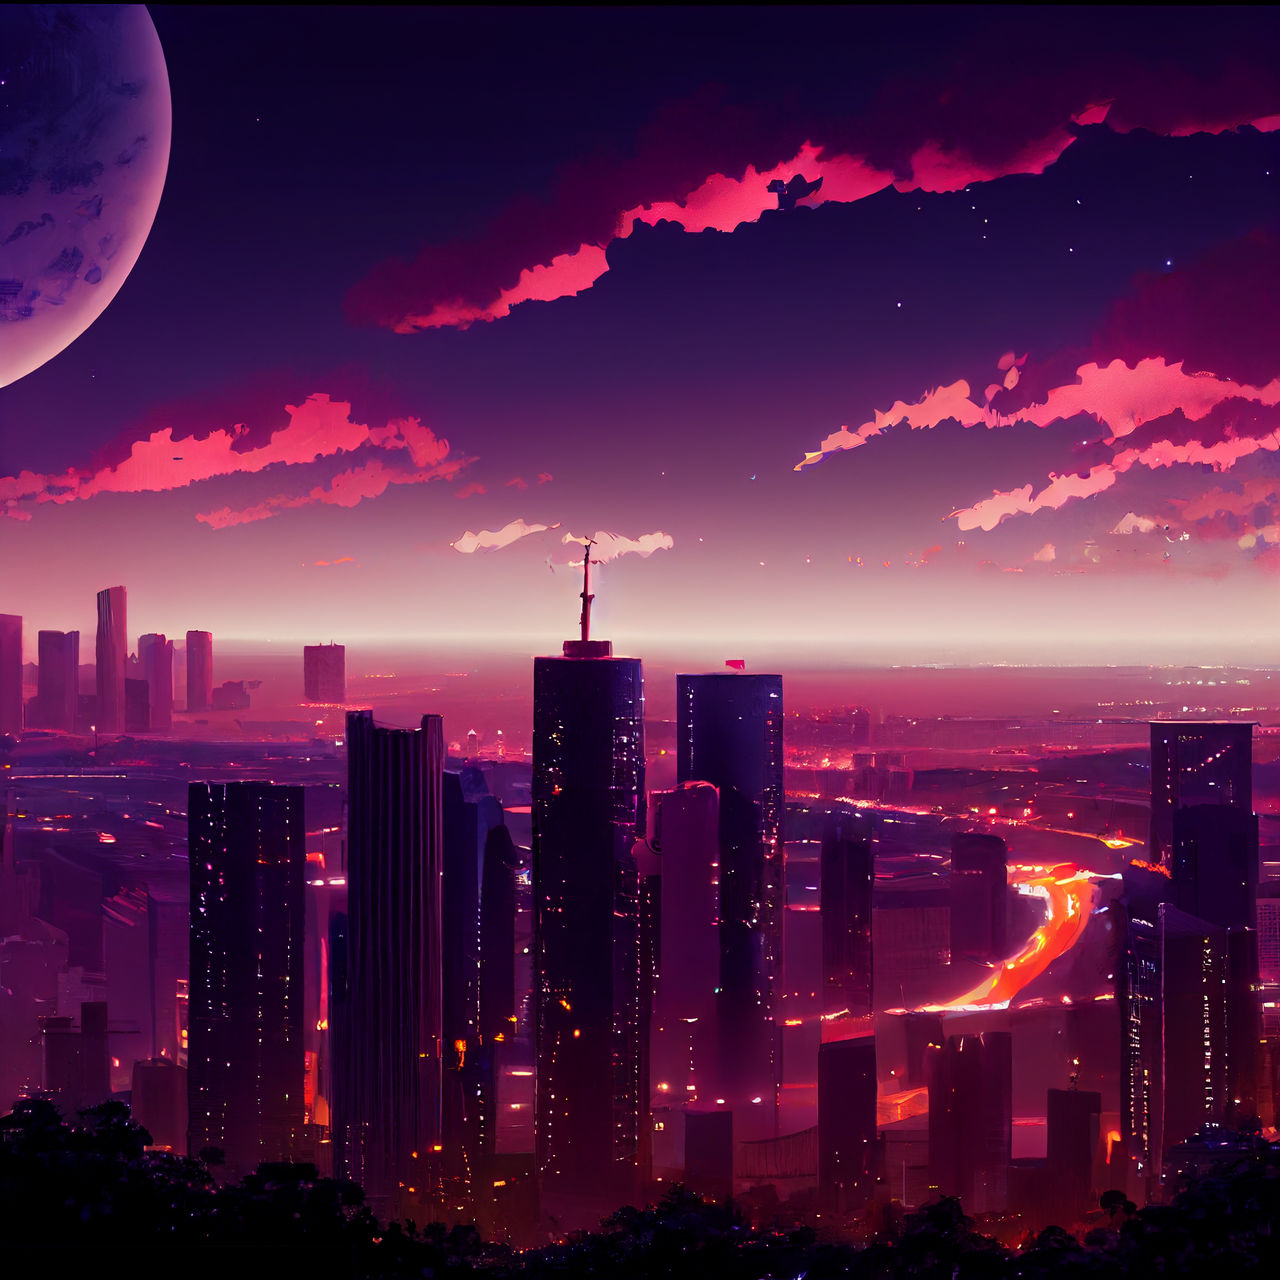 Night Cityscape by sugoidigi on DeviantArt